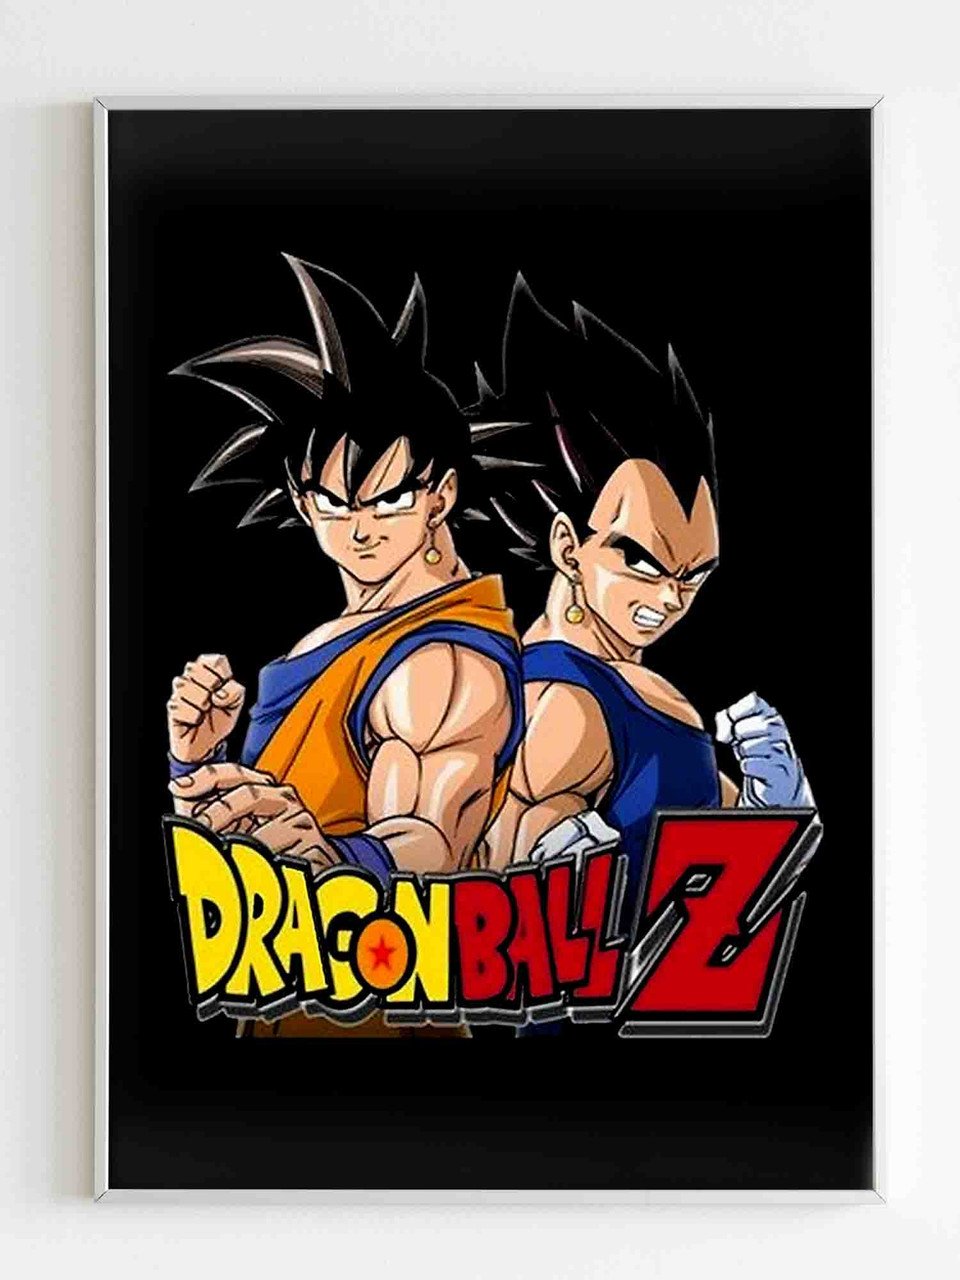 Dragon Ball Z Goku And Vegeta Potaro Wallpaper Poster